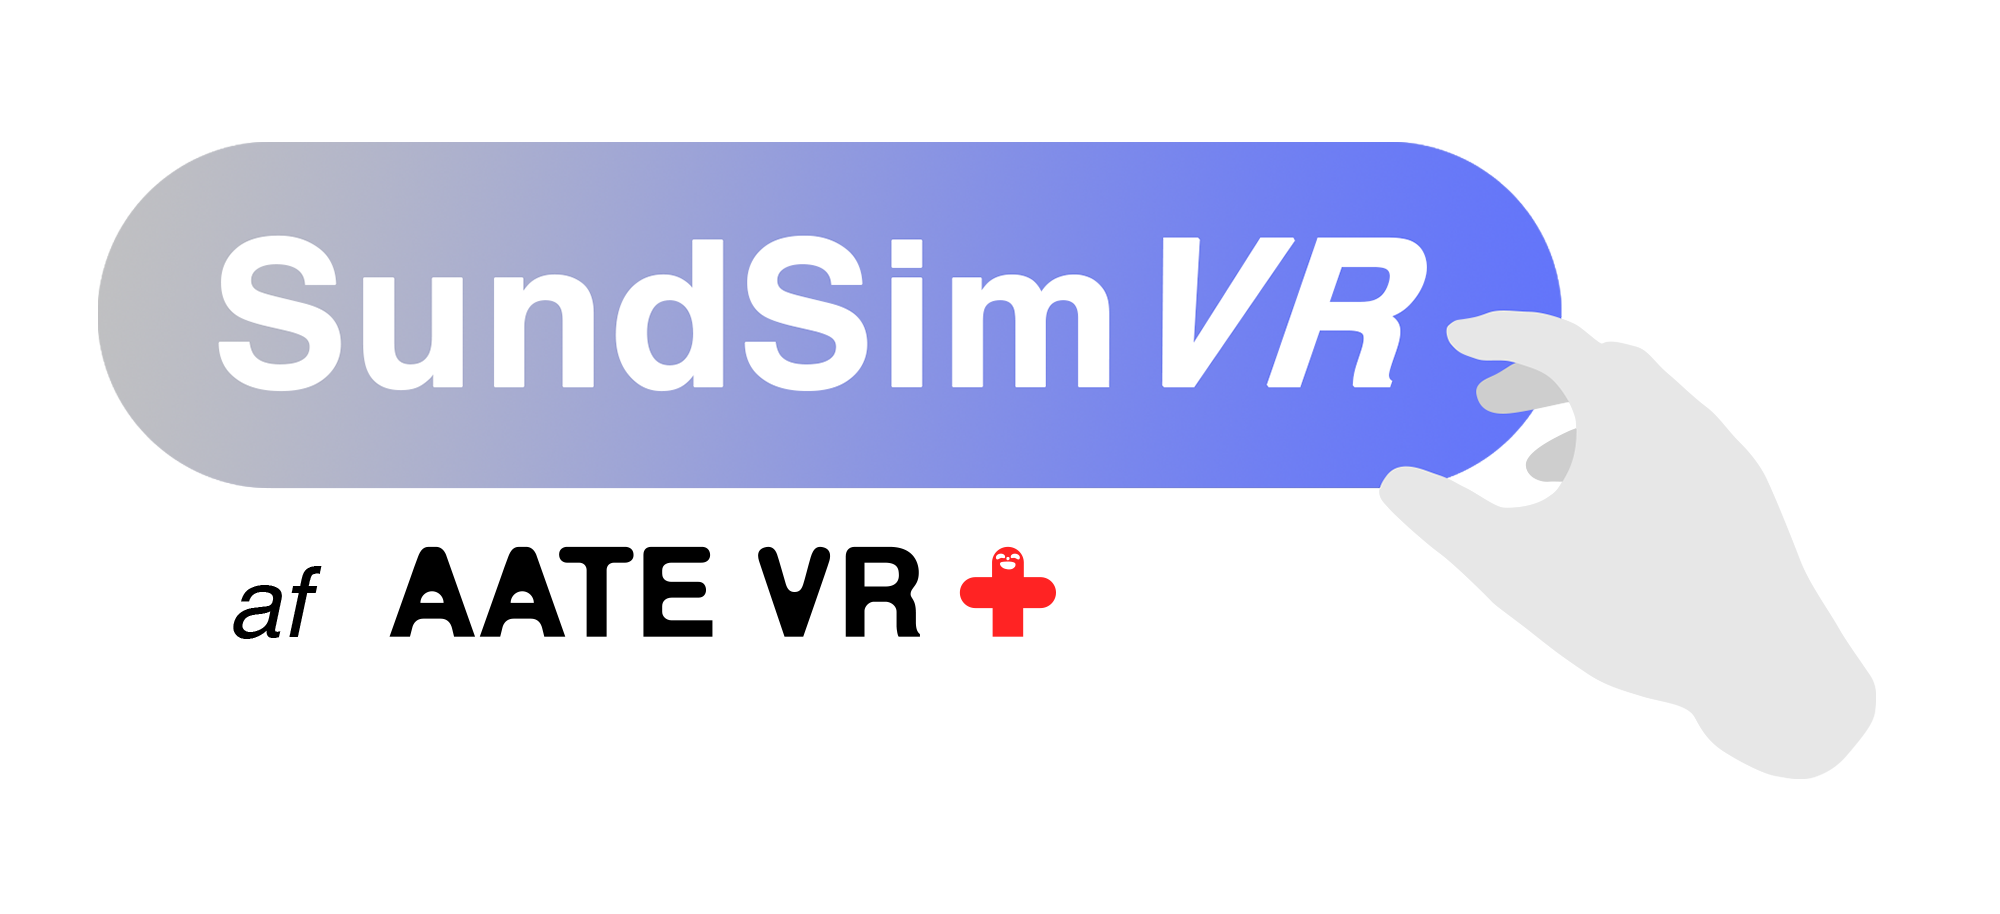 SundSim VR by AATE VR logo